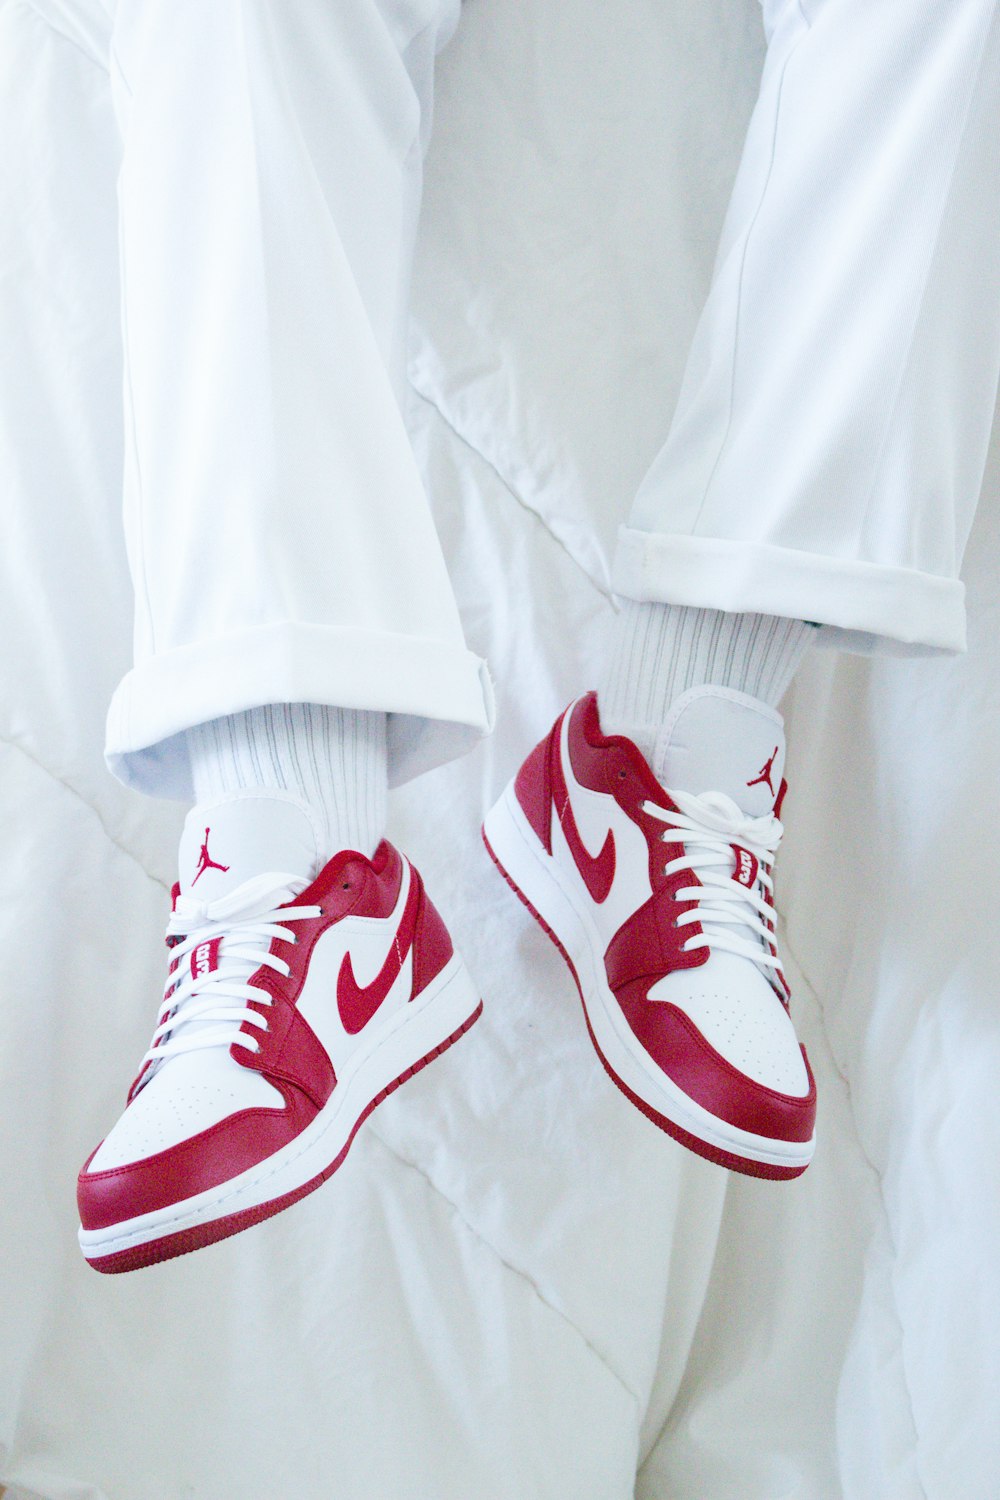 sneakers nike rosse bianche foto – Stile gratuita su Unsplash